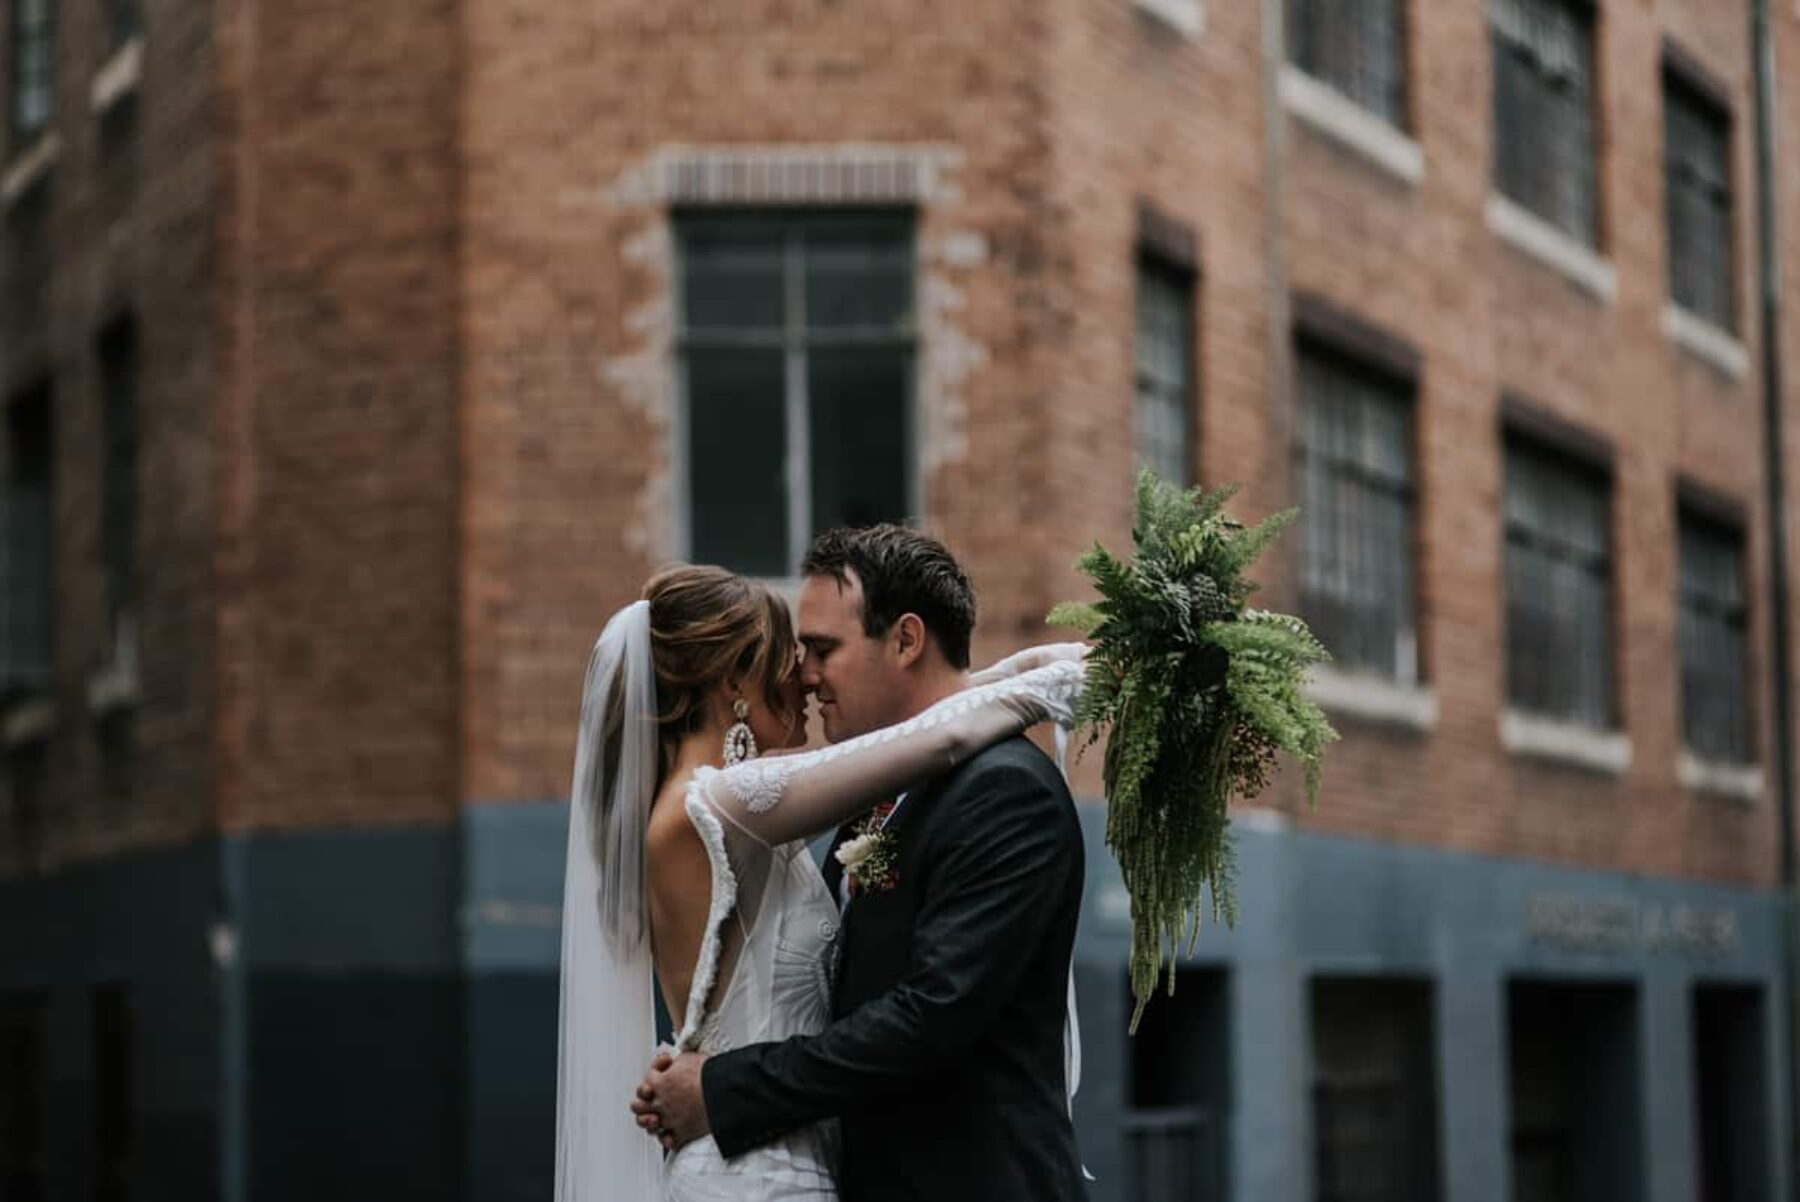 trendy Surry Hills wedding at Porteno / Sydney wedding photographer Damien Milan